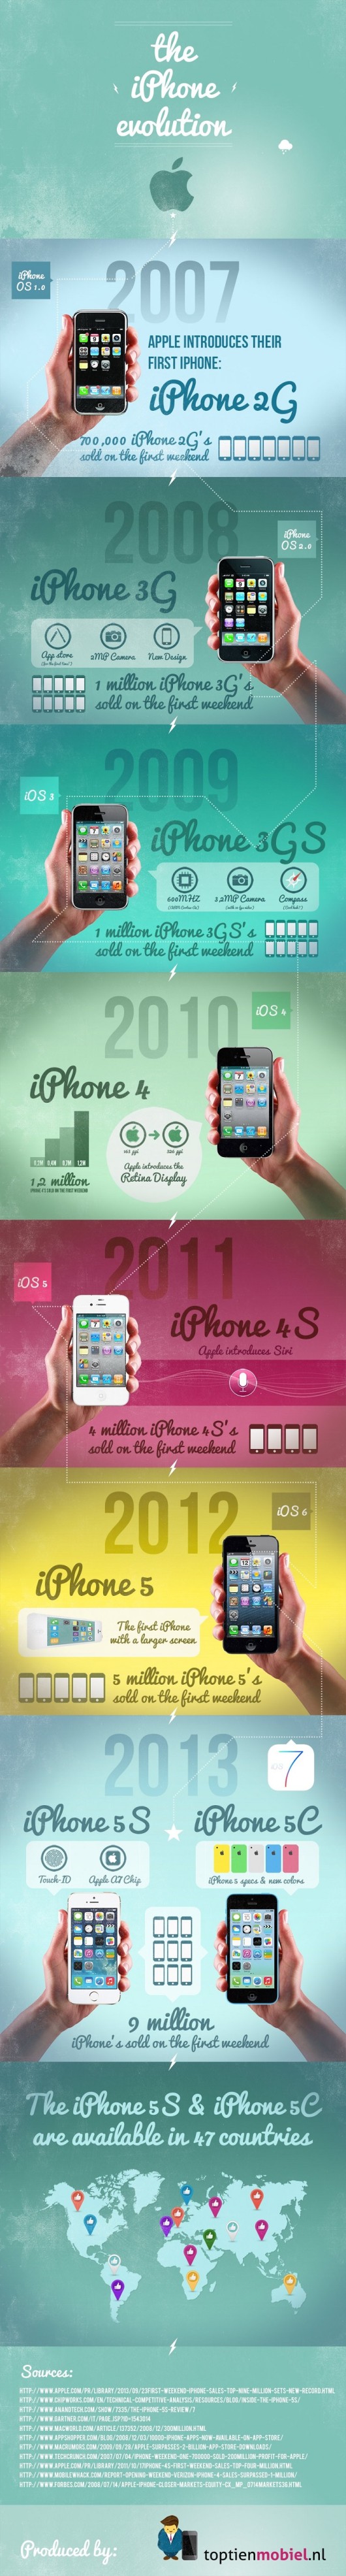 iPhone-Evolution-Infographic